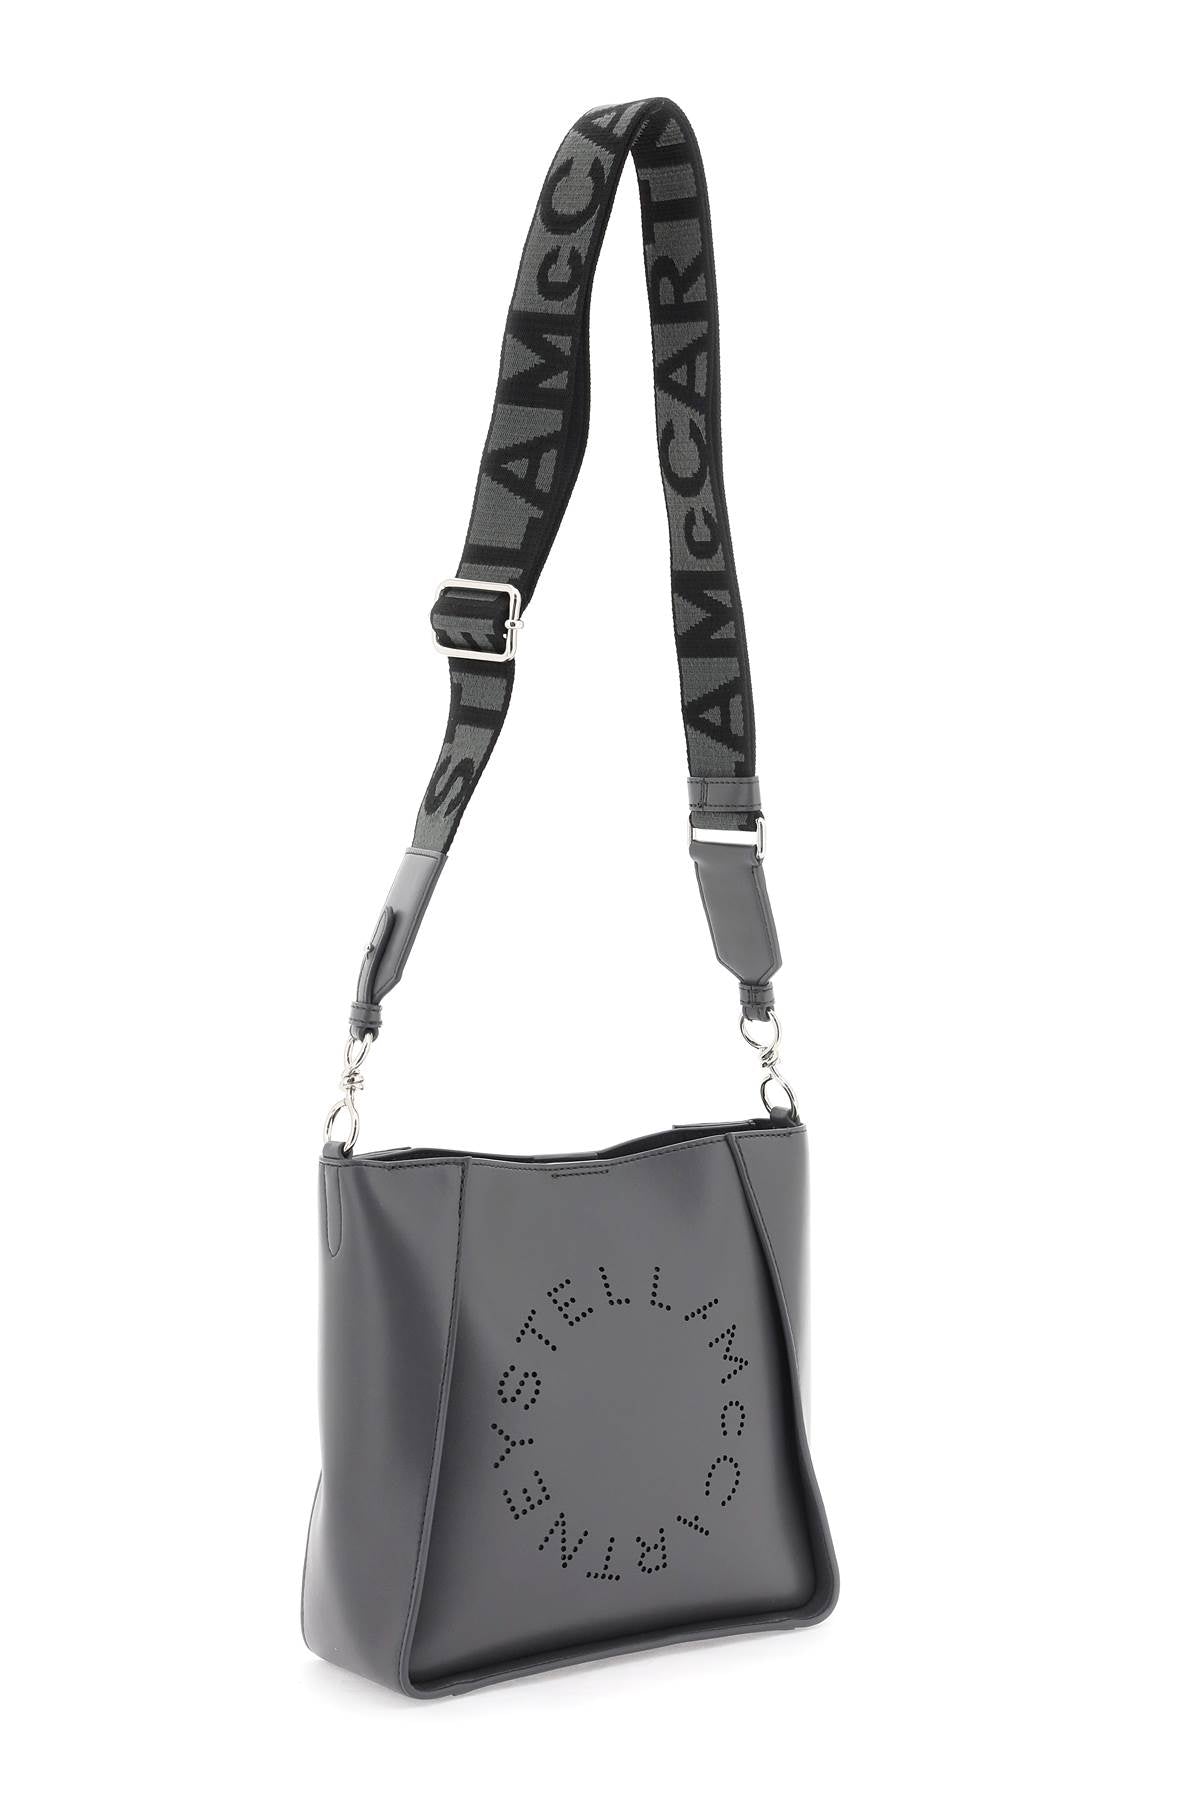 Stella mccartney crossbody bag with perforated stella logo-2